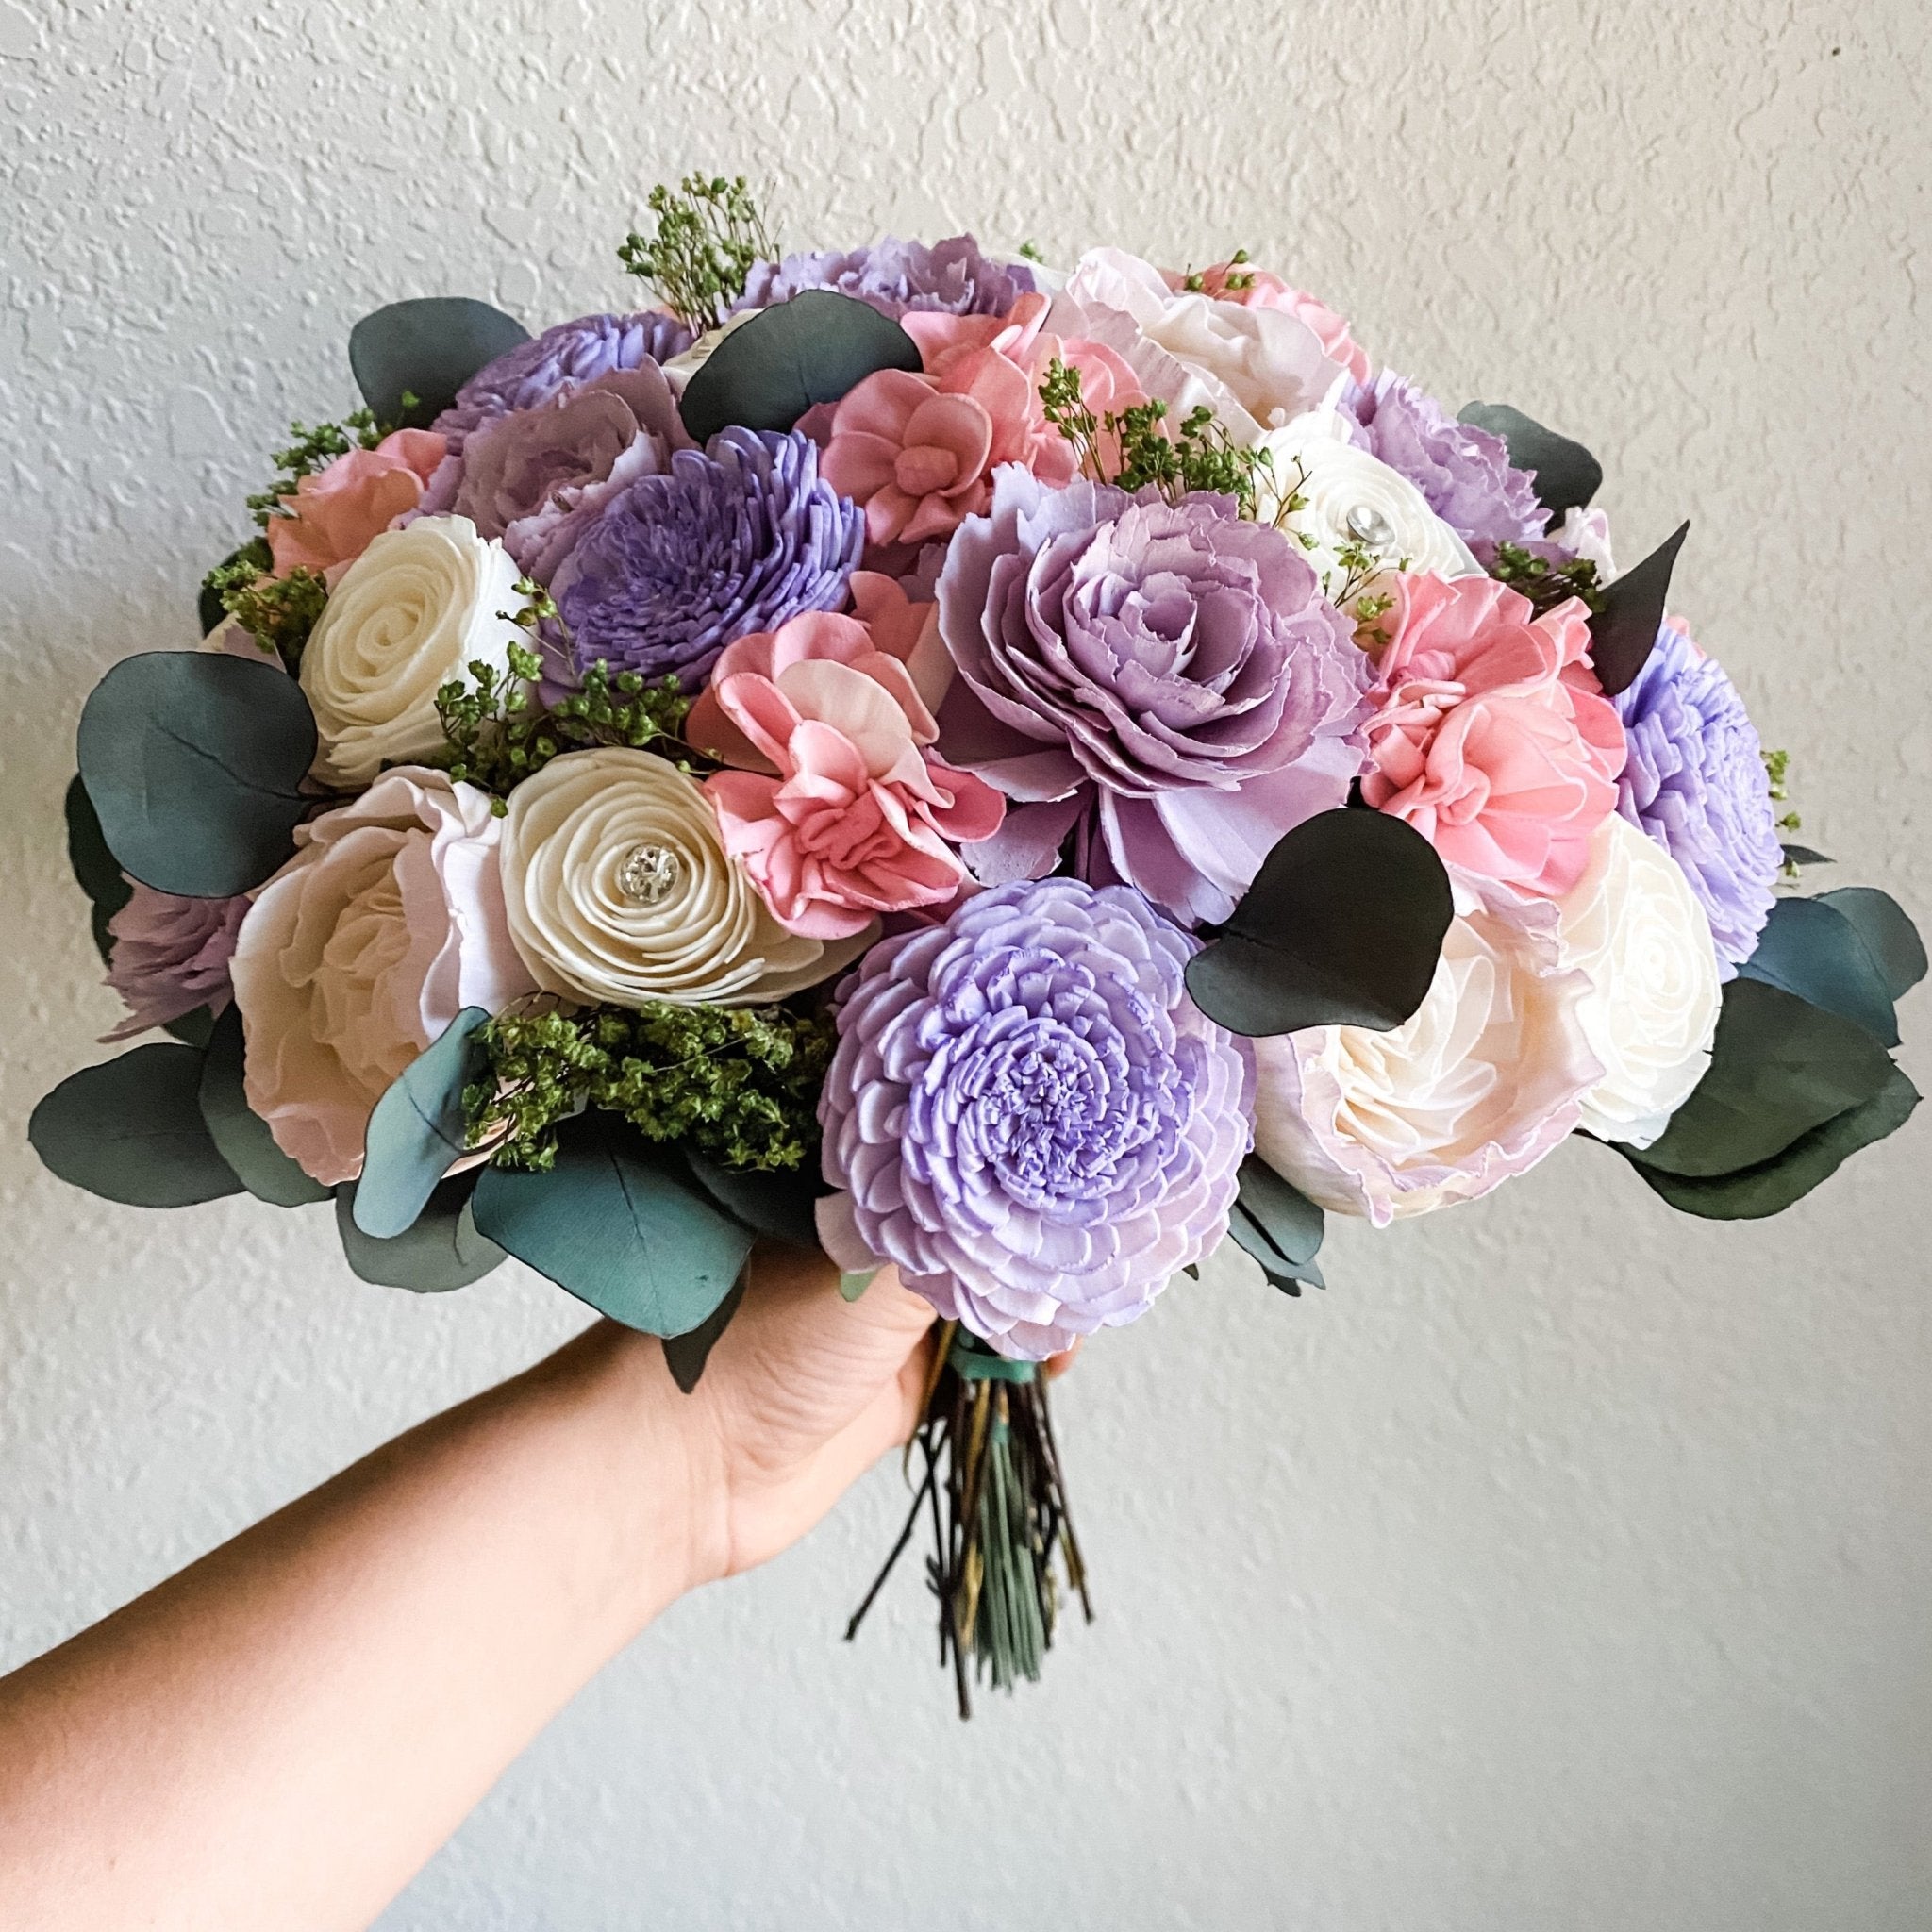 Spring Garden Bouquet fro Weddings or Quinceañeras - PapiroExtra Large 12&quot; Bride